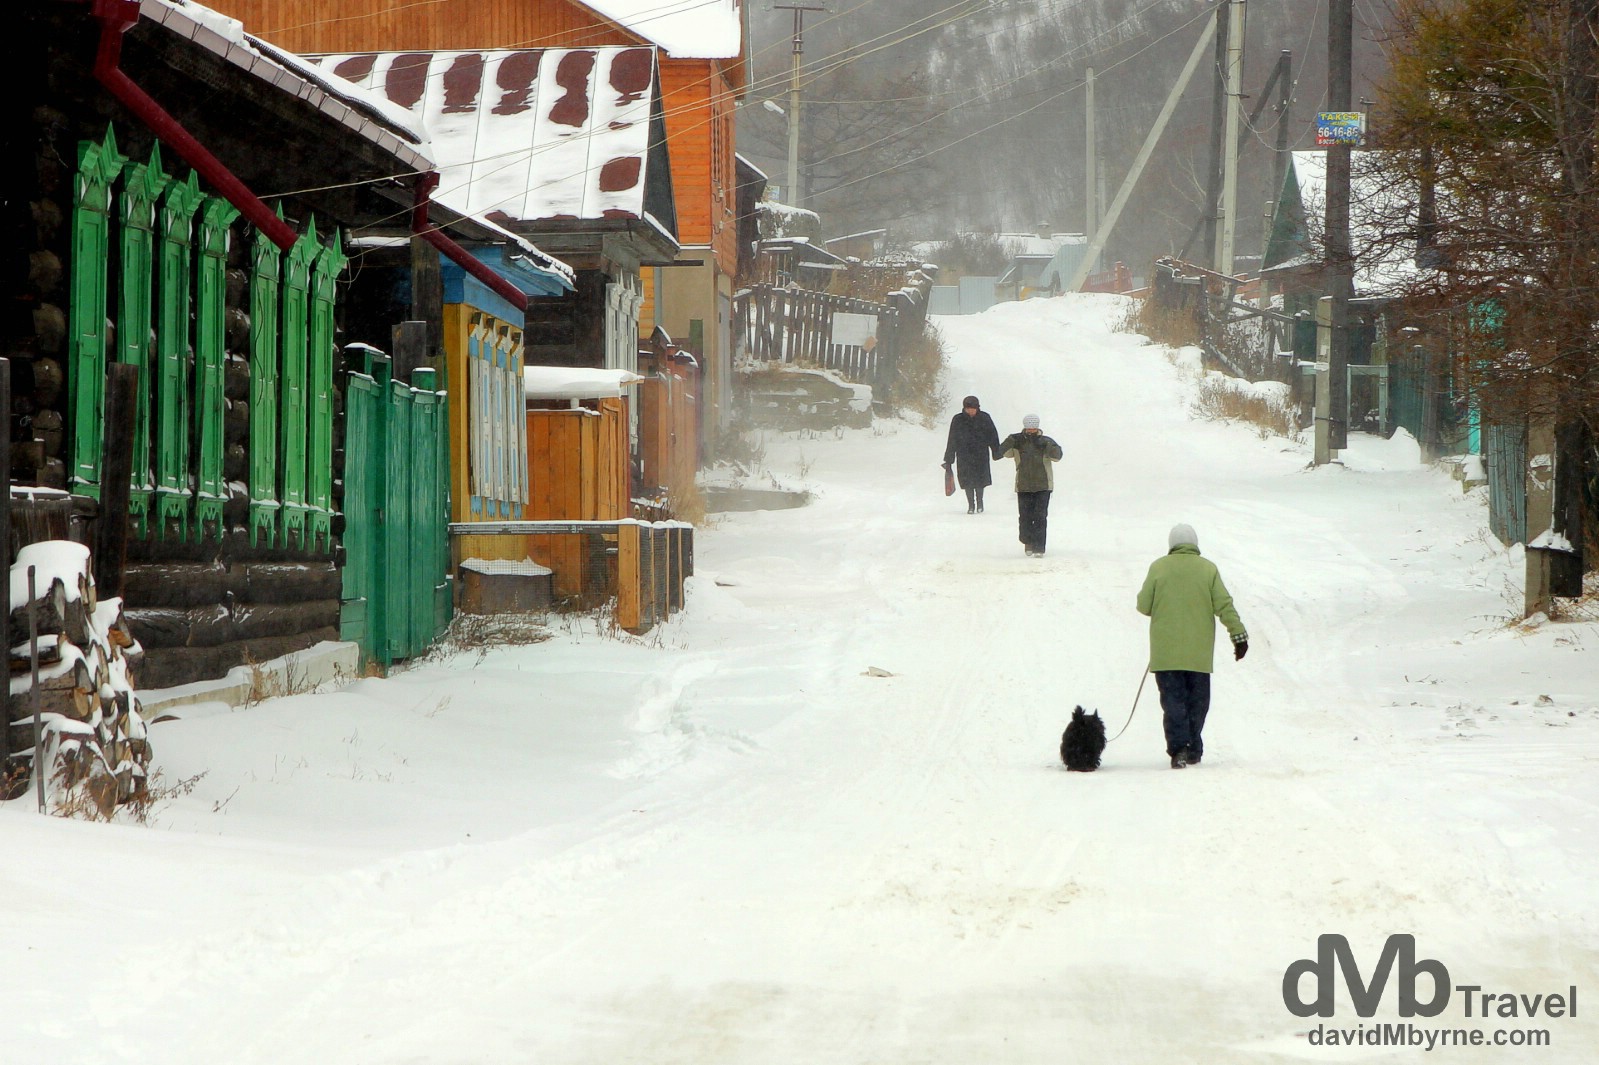  Walking in the snow in the village of Listvyanka on the shores of Lake Baikal, Irkutsk Oblat, Russia. November 9th 2012